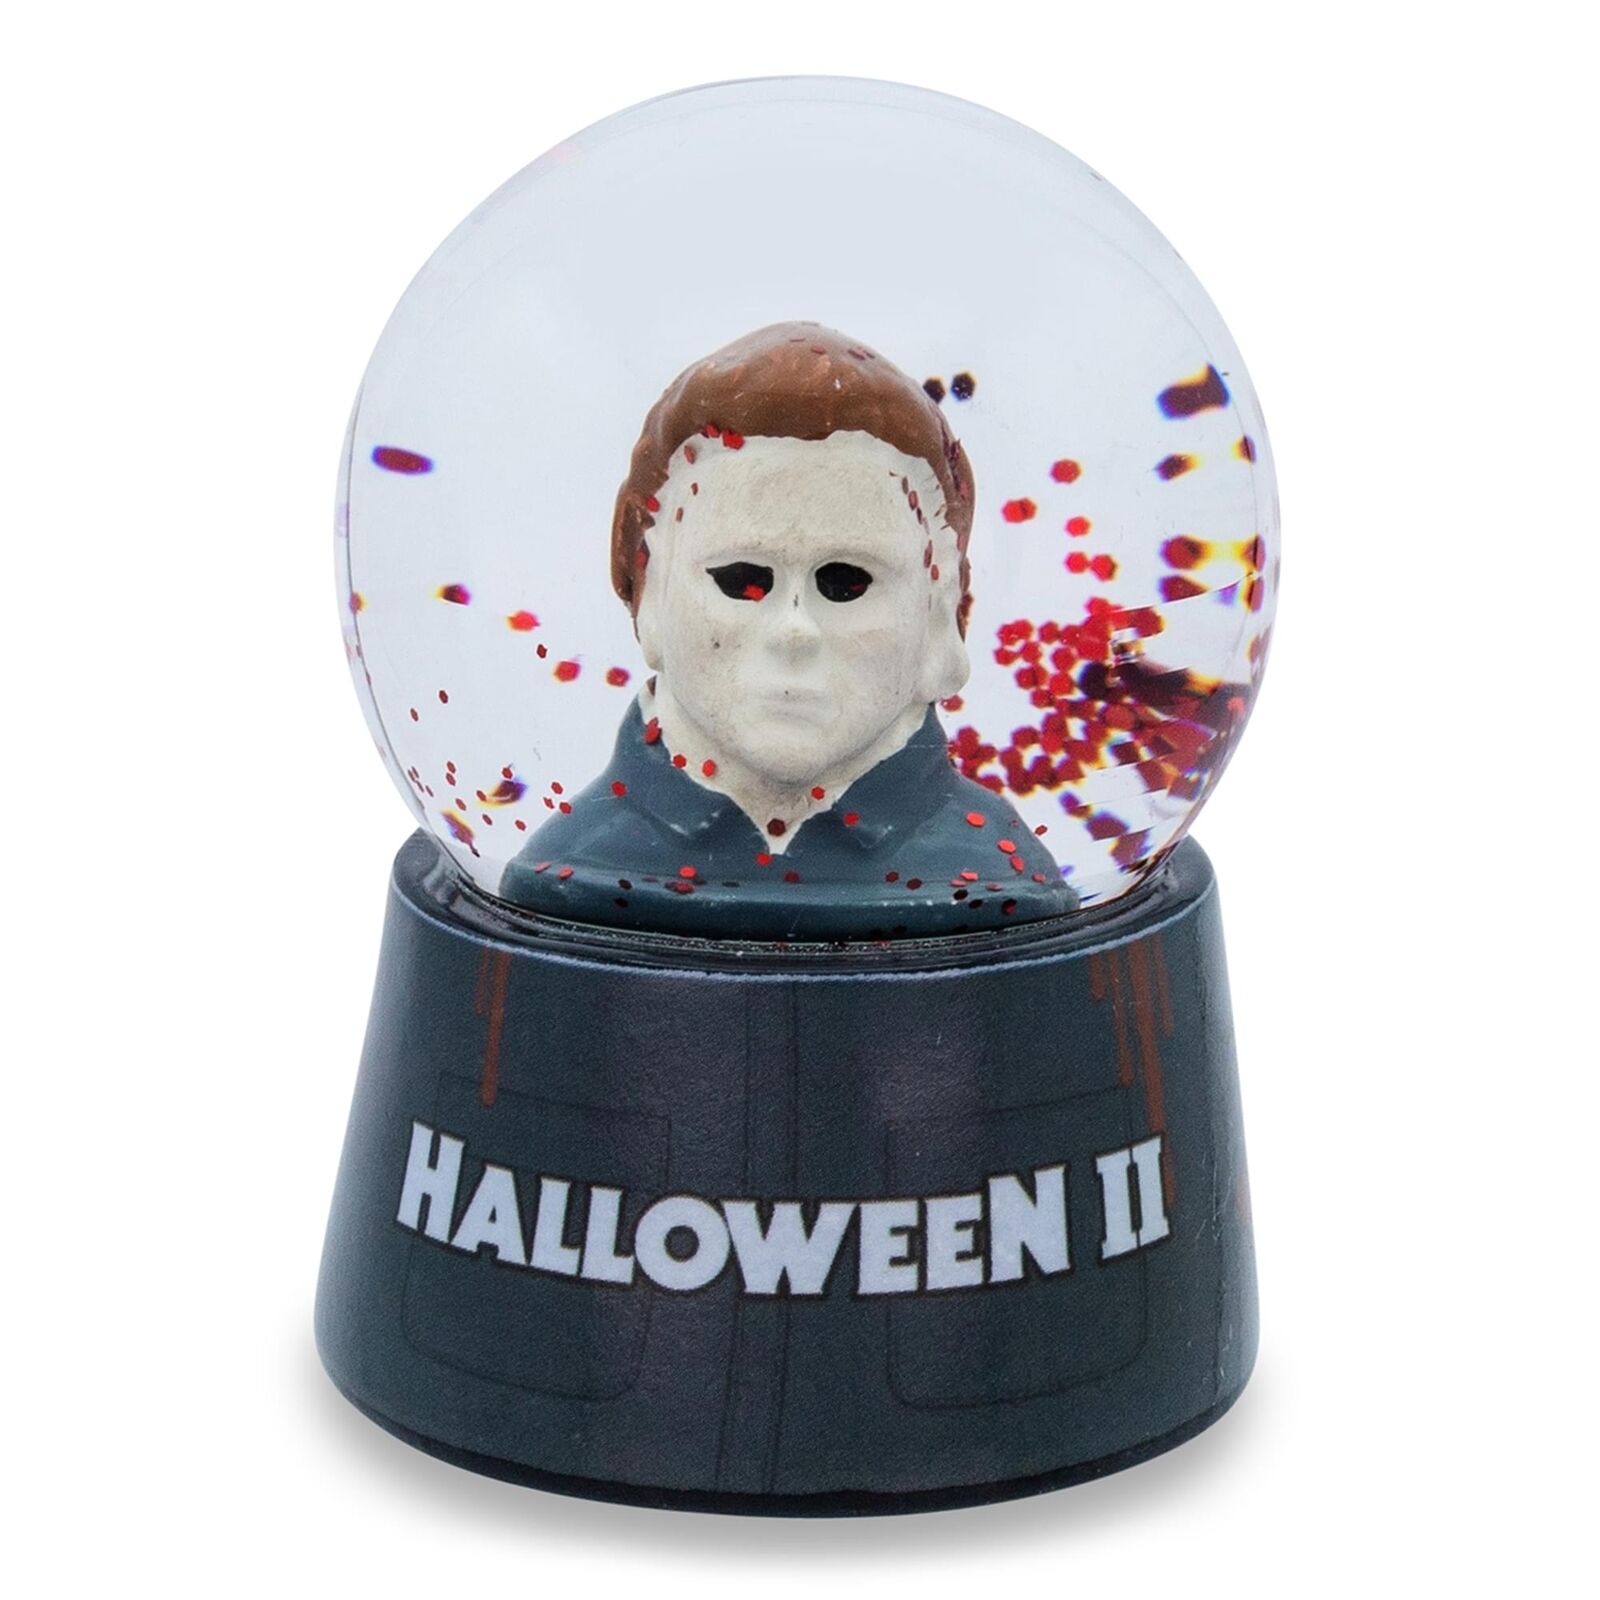 Halloween II Michael Myers Collectible Mini Snow Globe | 3 Inches Tall